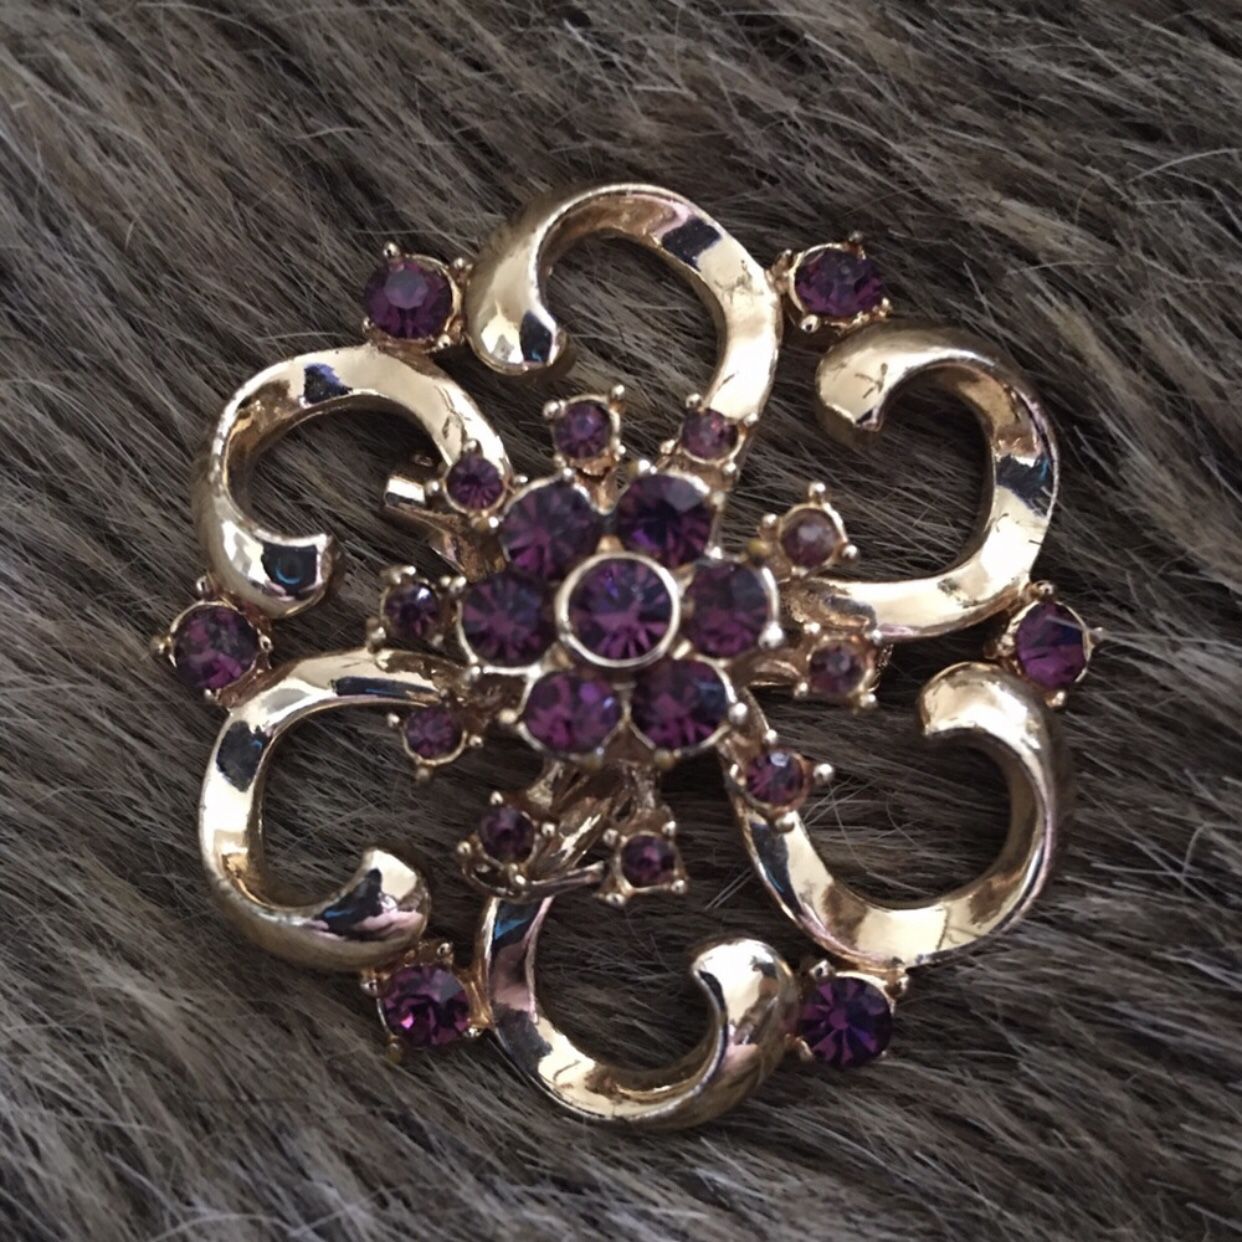 Vintage 60s Coro purple rhinestone cluster brooch